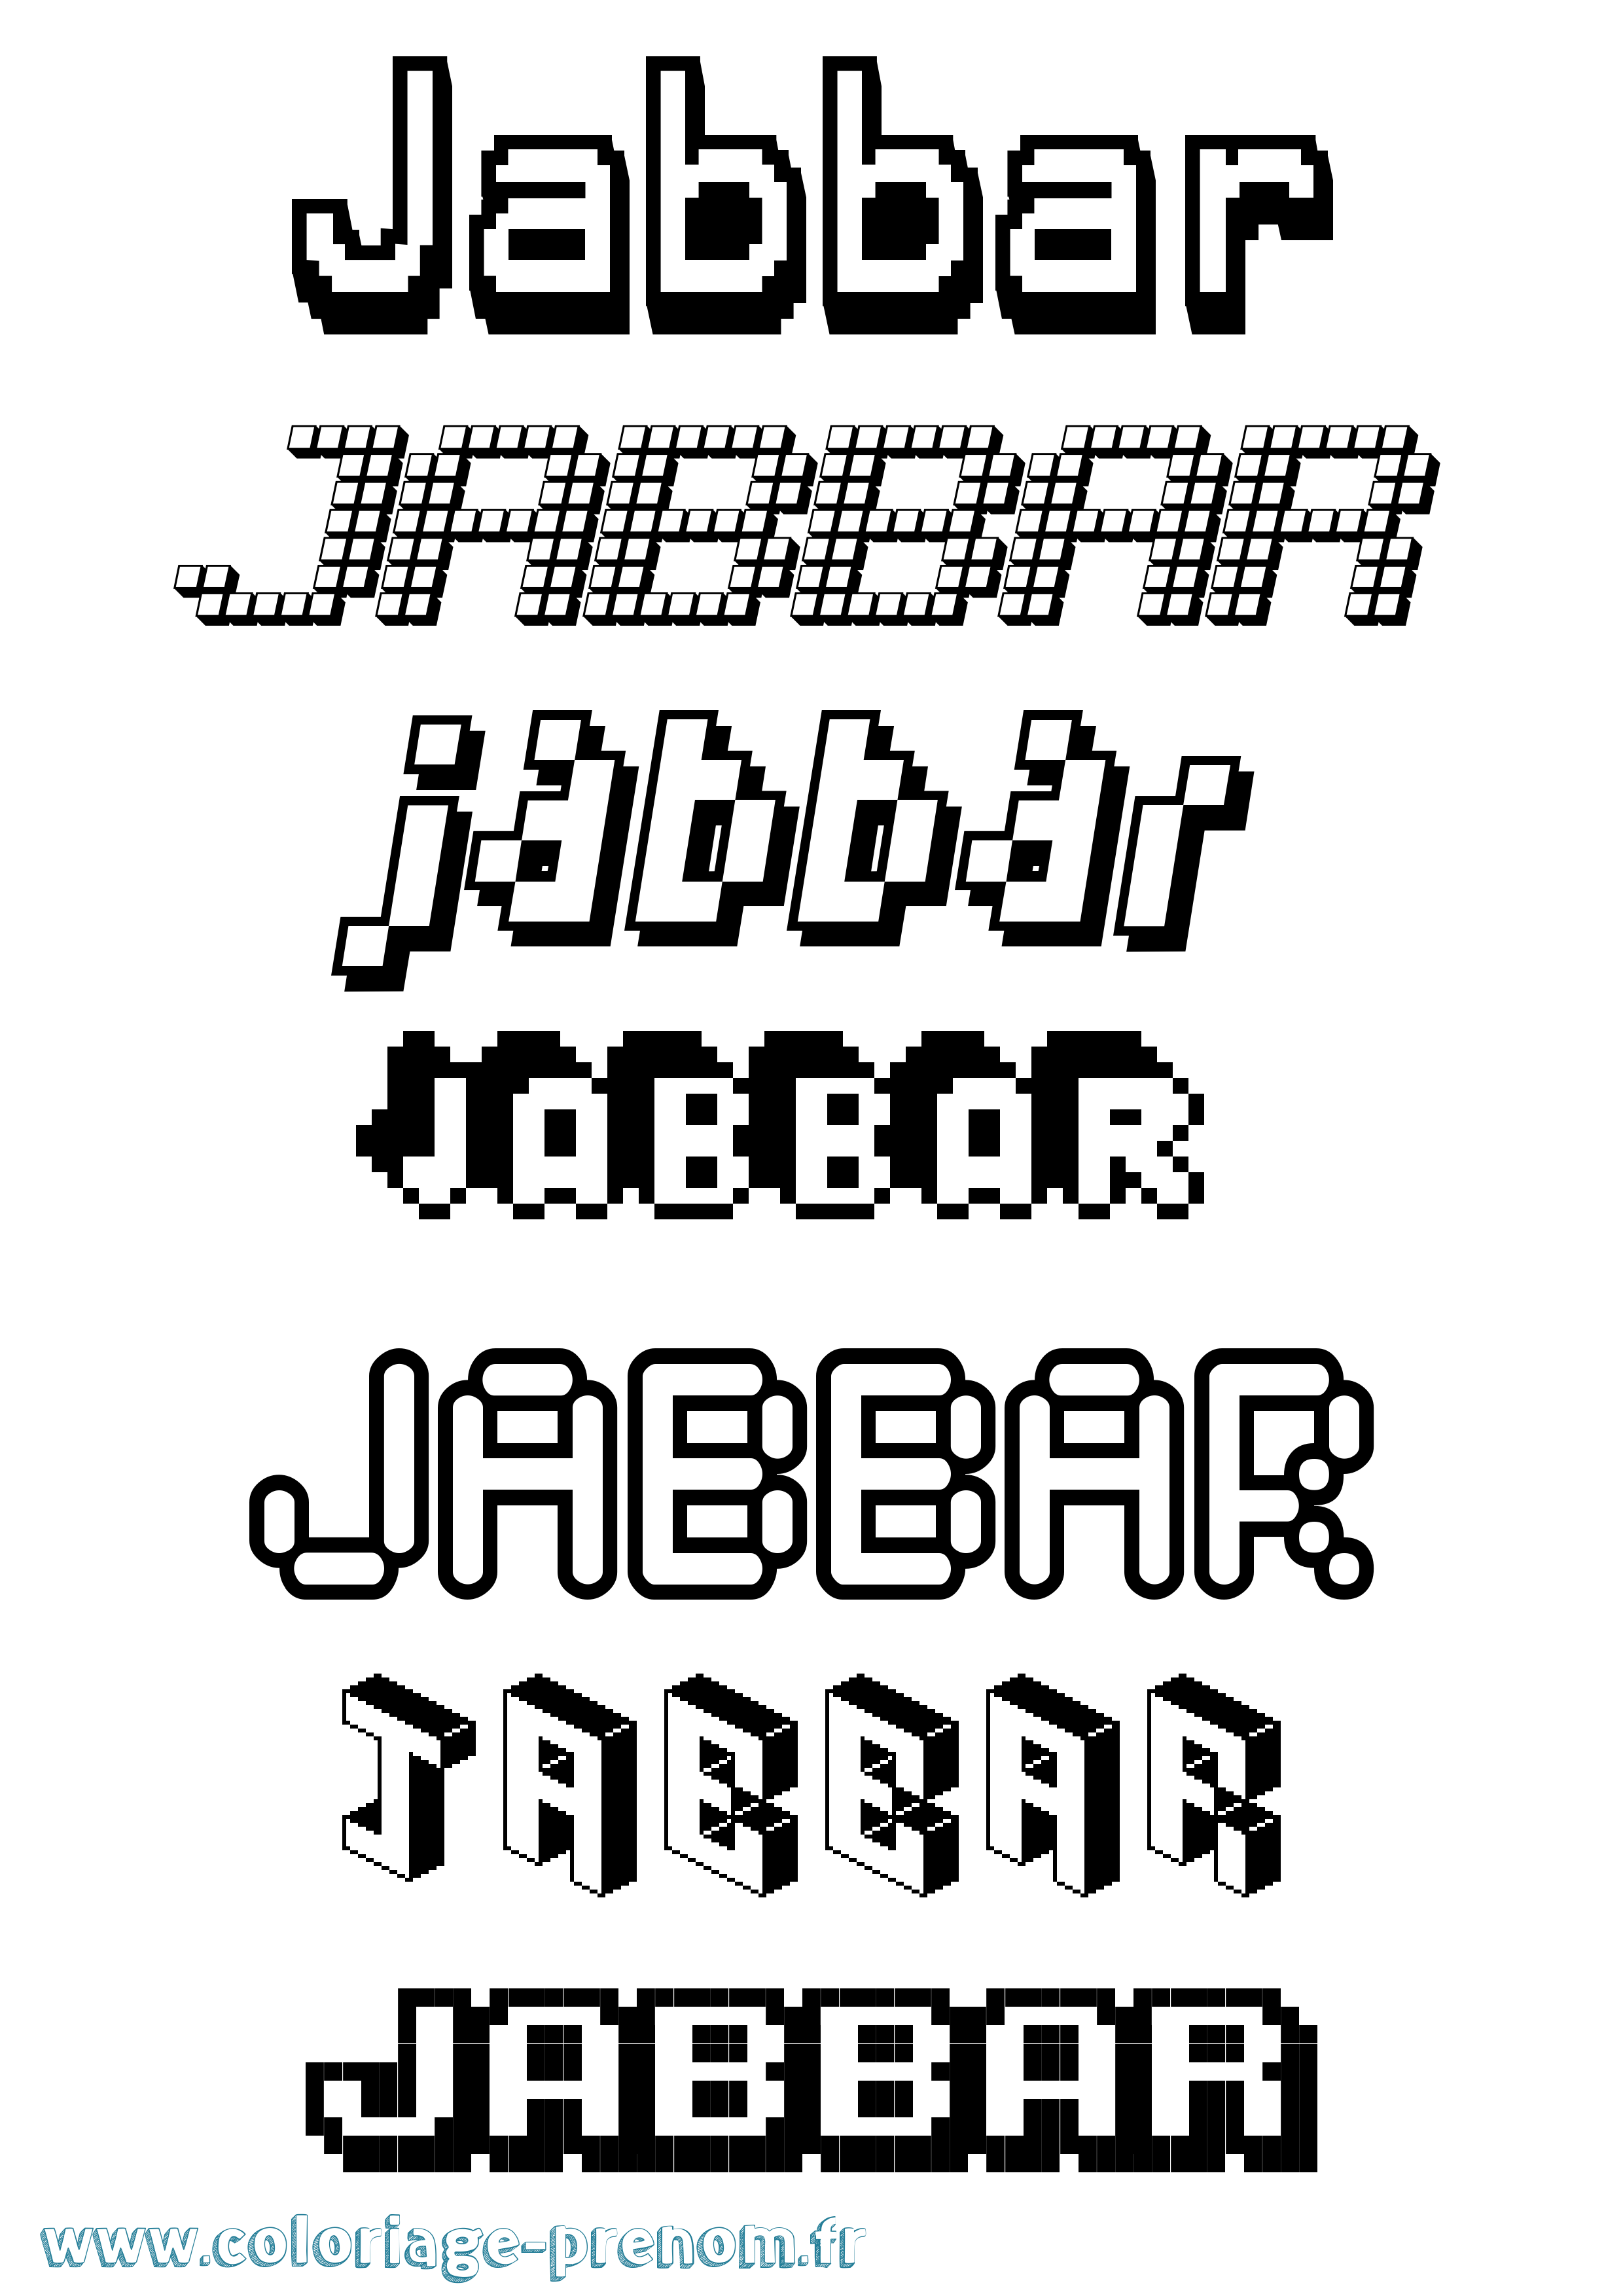 Coloriage prénom Jabbar Pixel